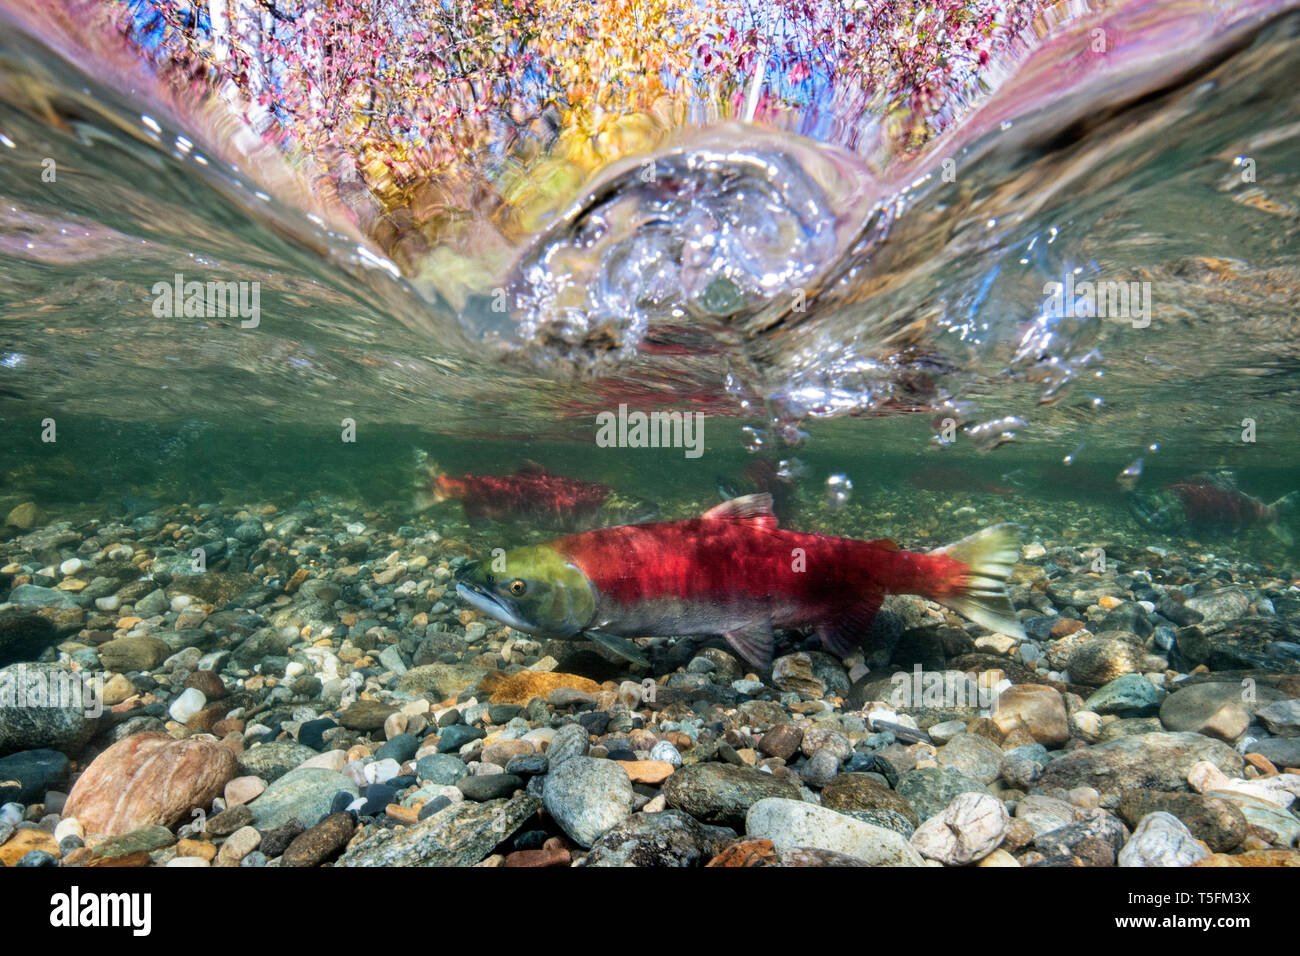 California, British Columbia, Adams River, Sockeye salmon, Oncorhynchus nerka, over-under image Stock Photo